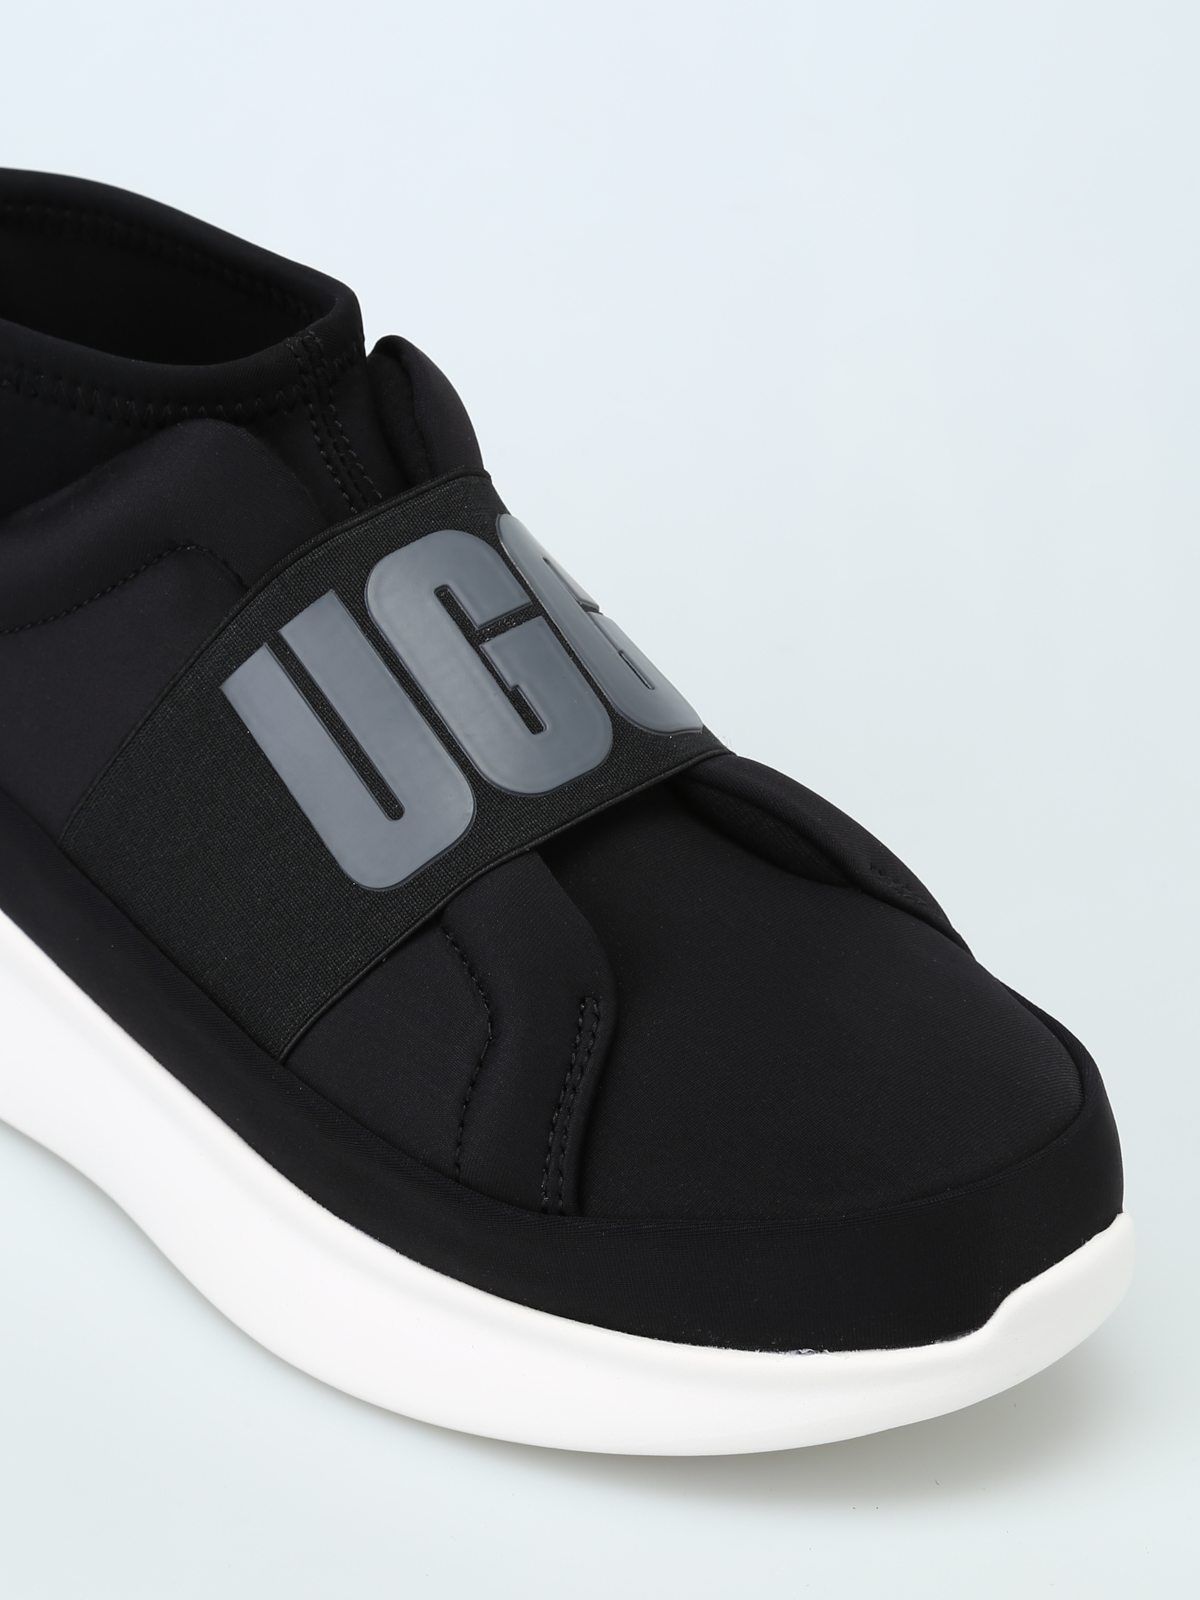 Ugg Neutra Slip On Shoes Grey | Dressinn